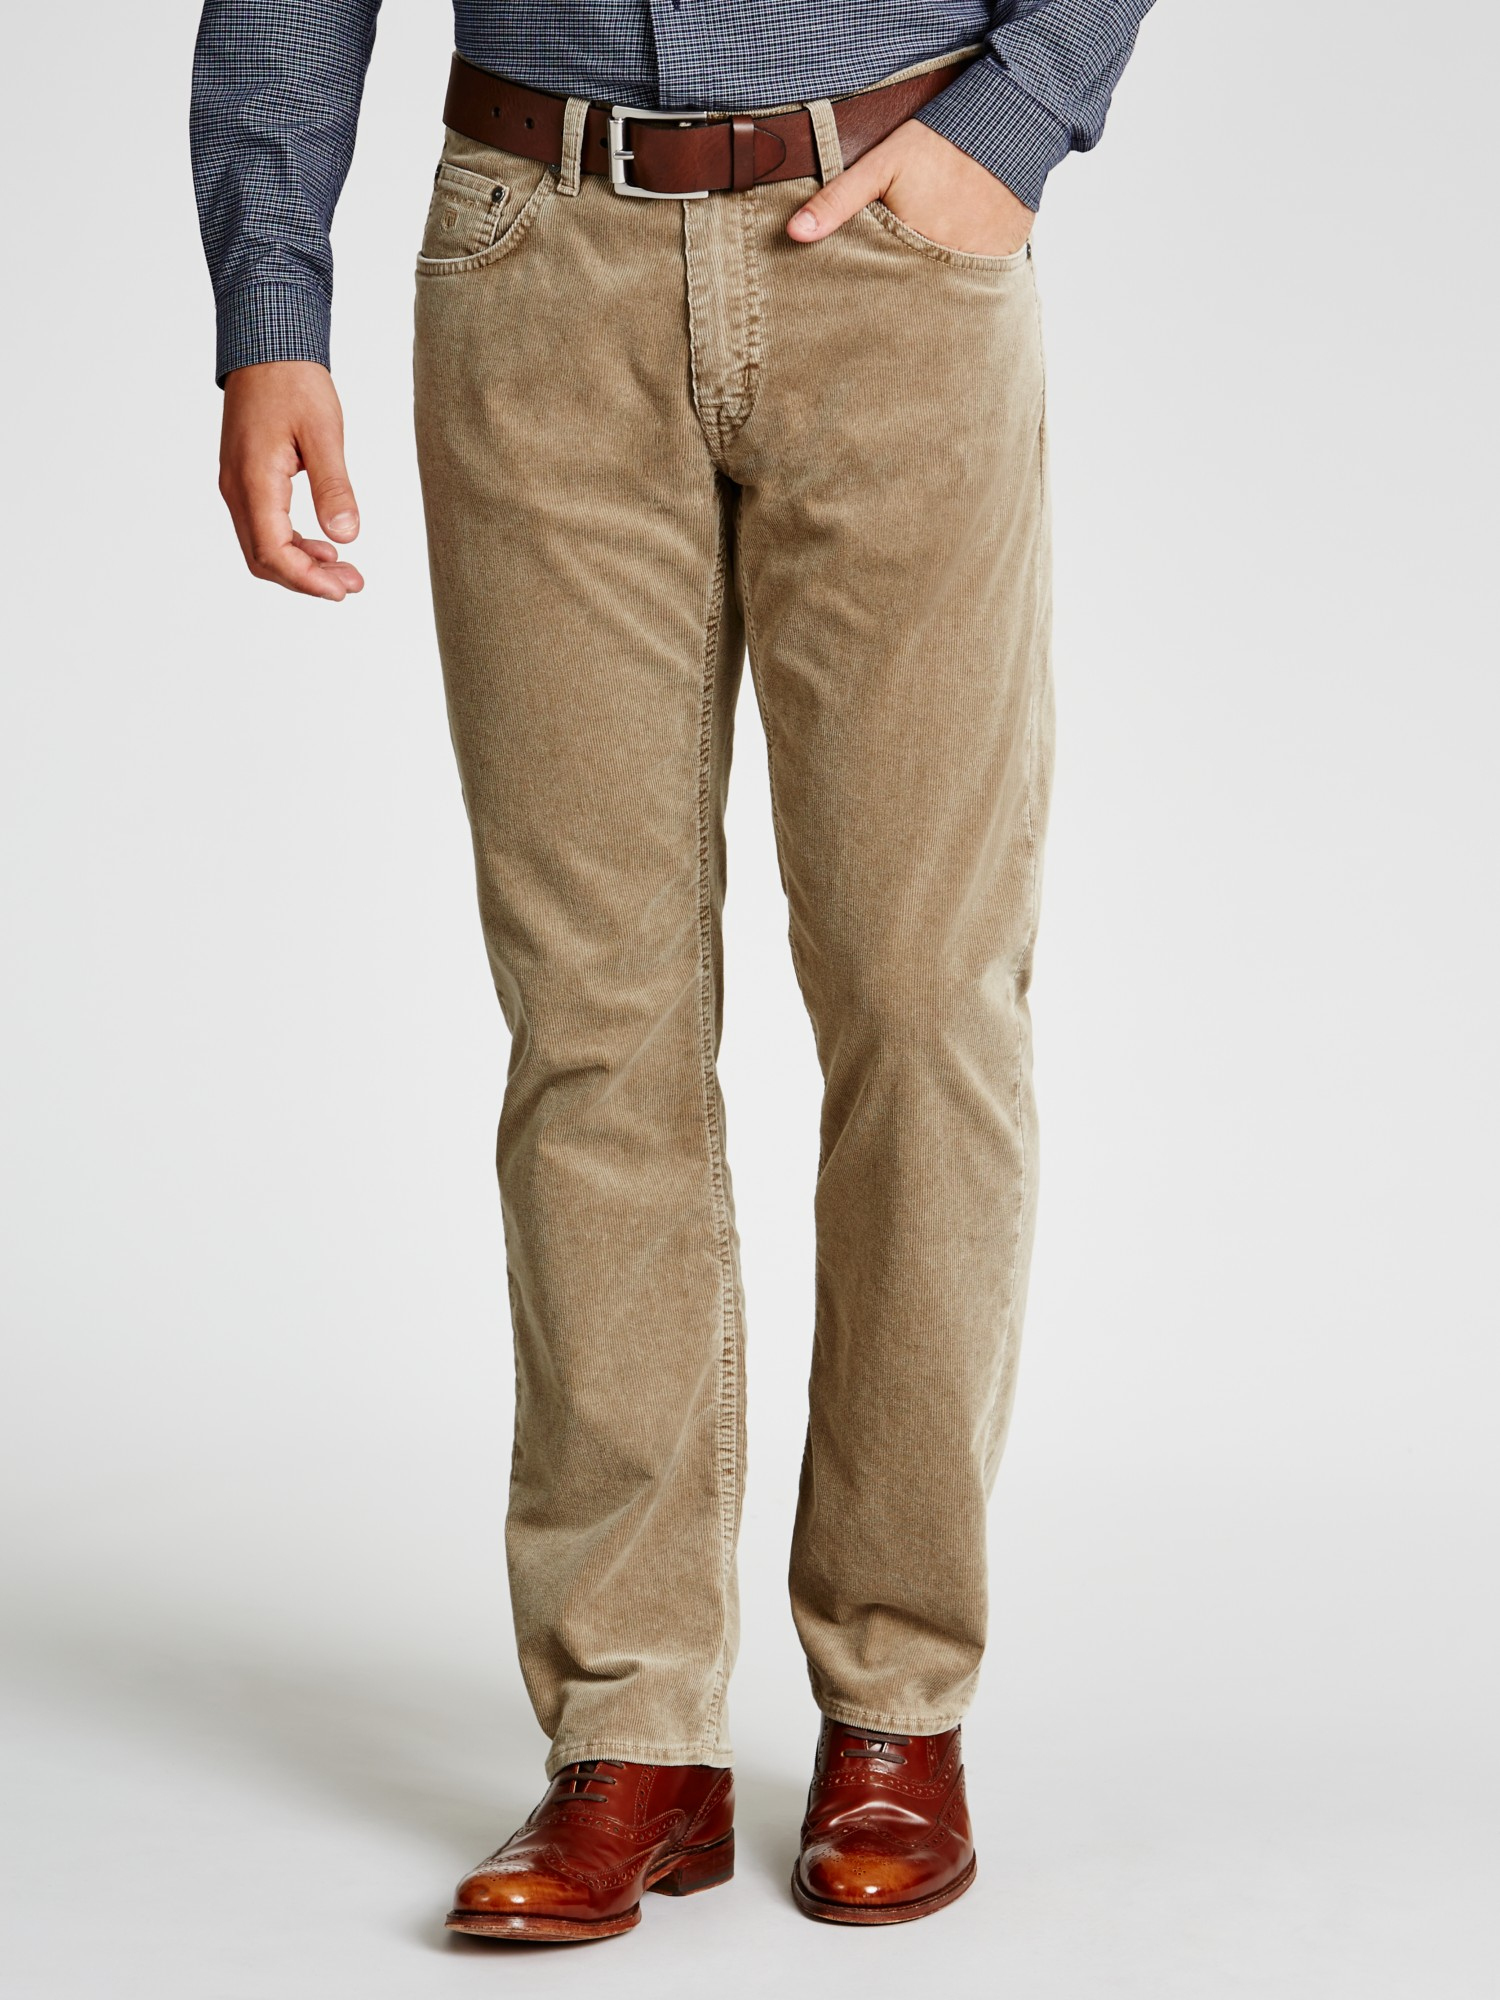 GANT Jason 5 Pocket Corduroy Trousers in Vintage (Brown) for Men - Lyst